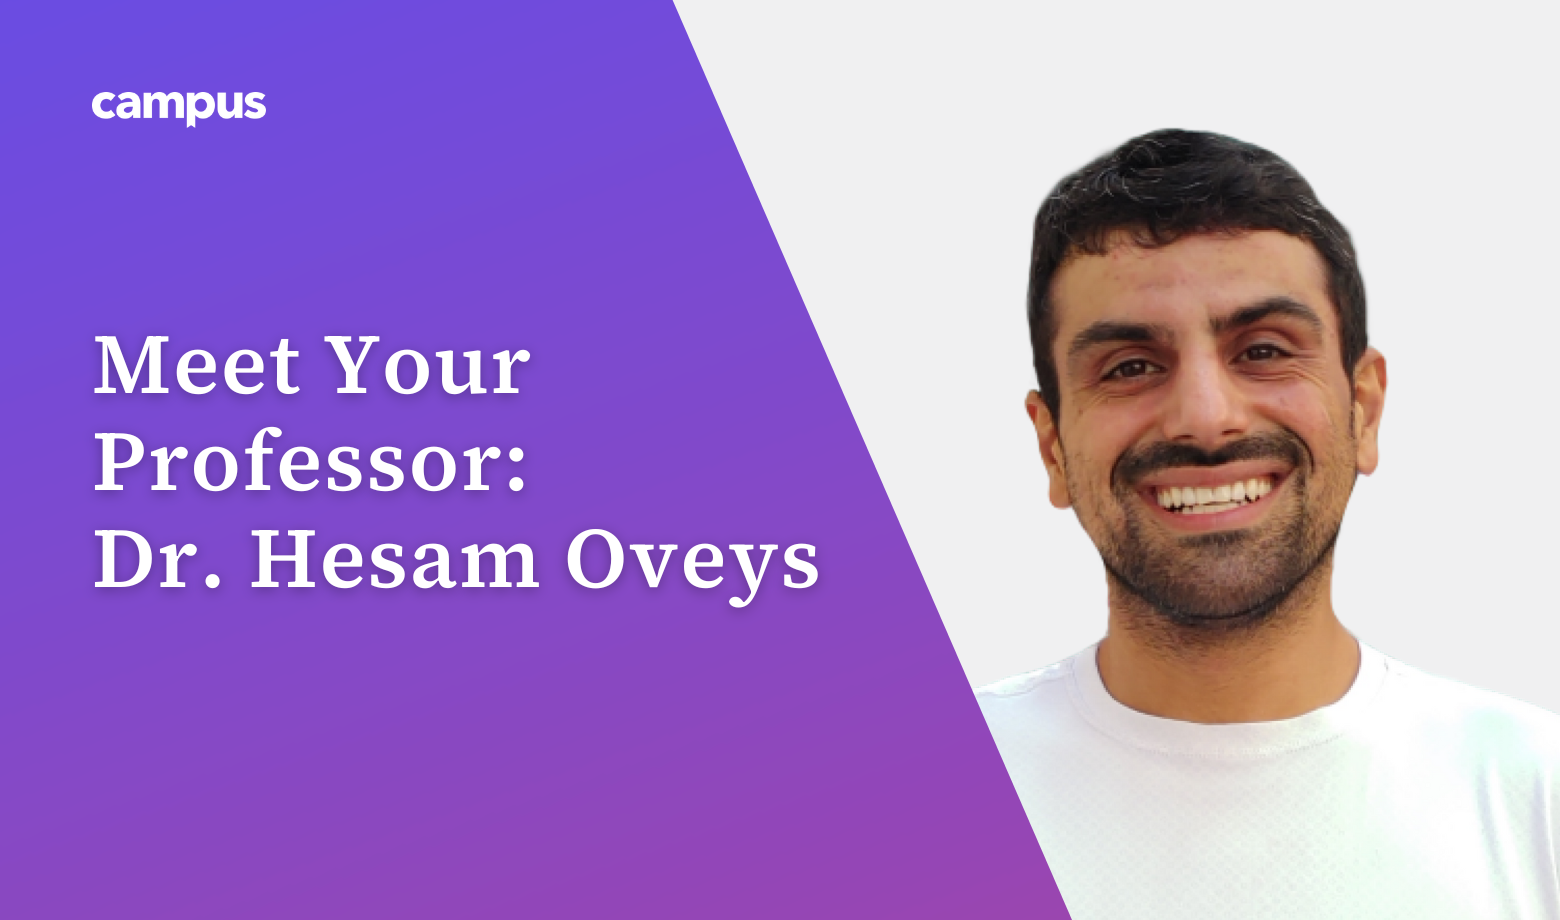 Meet Your Professor: Dr. Hesam Oveys